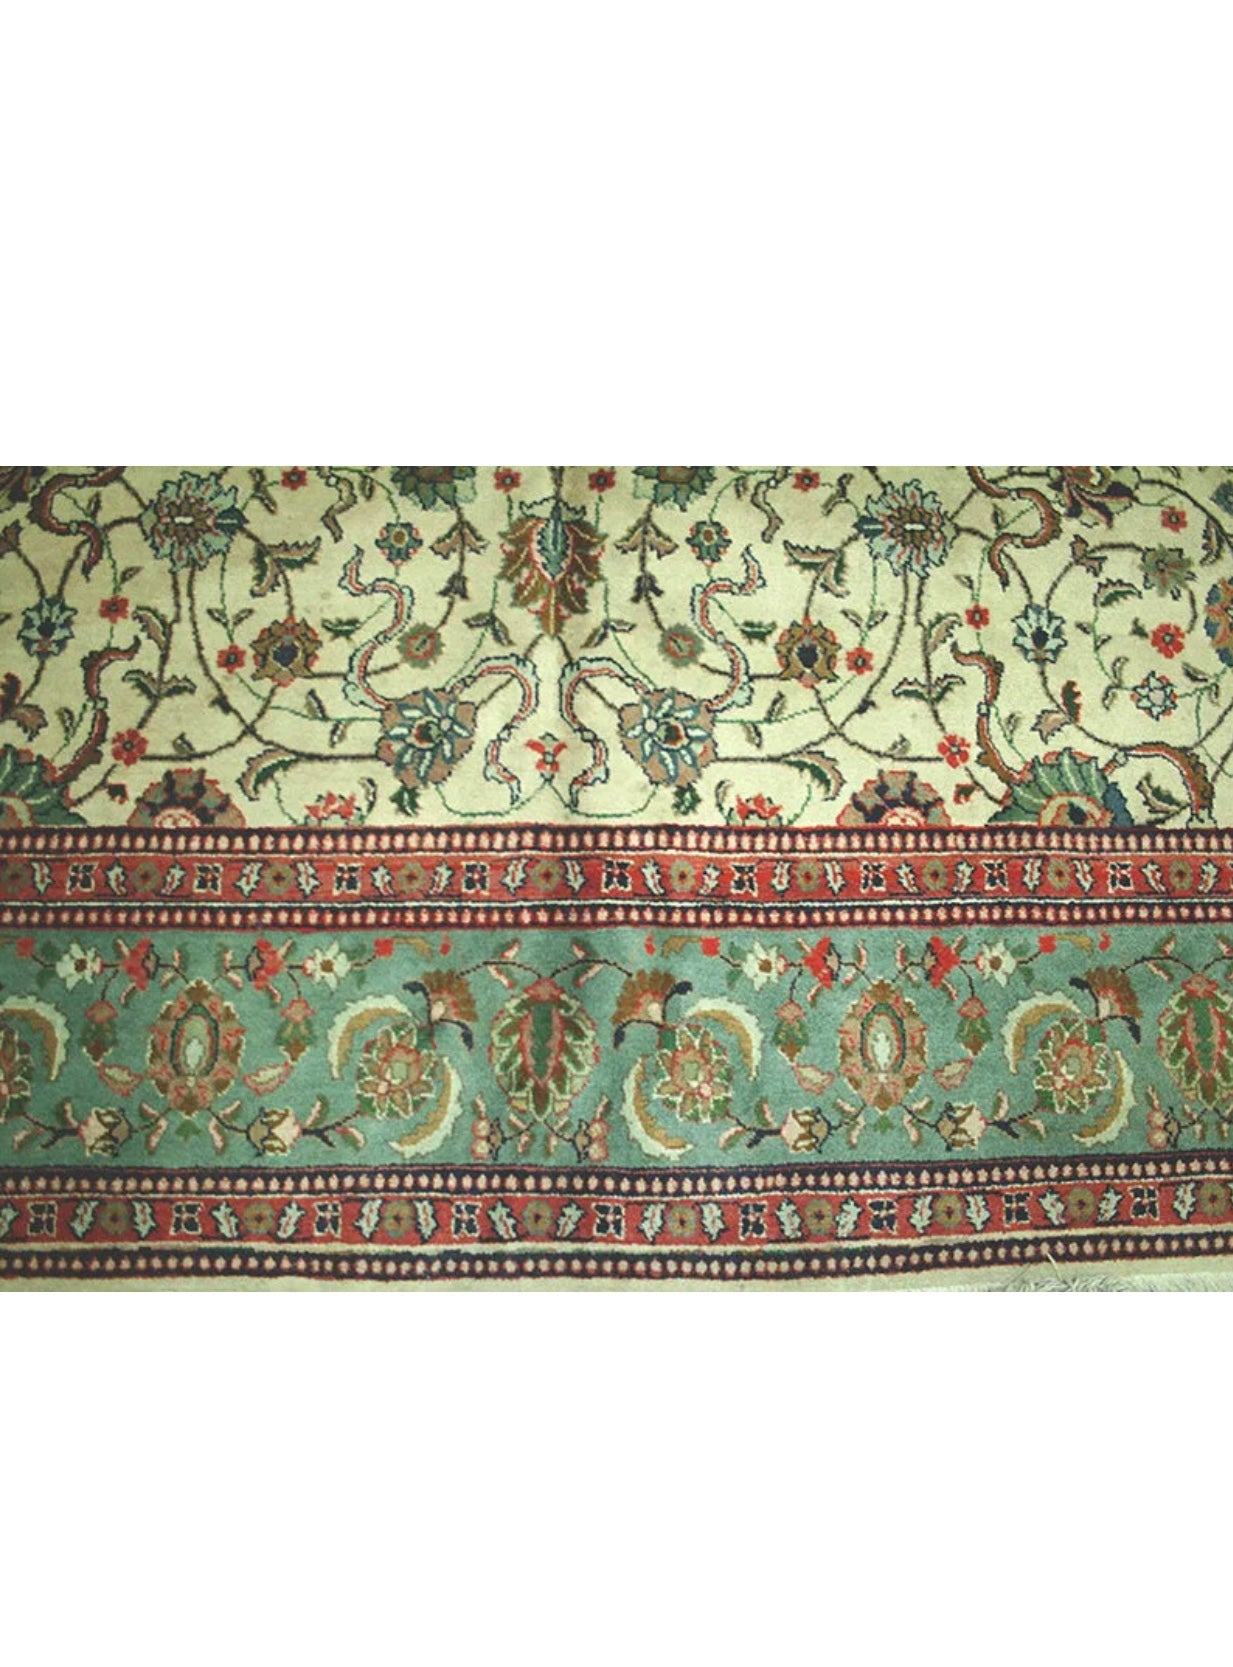 A Superb Antique Signed Persian Tabriz Rug